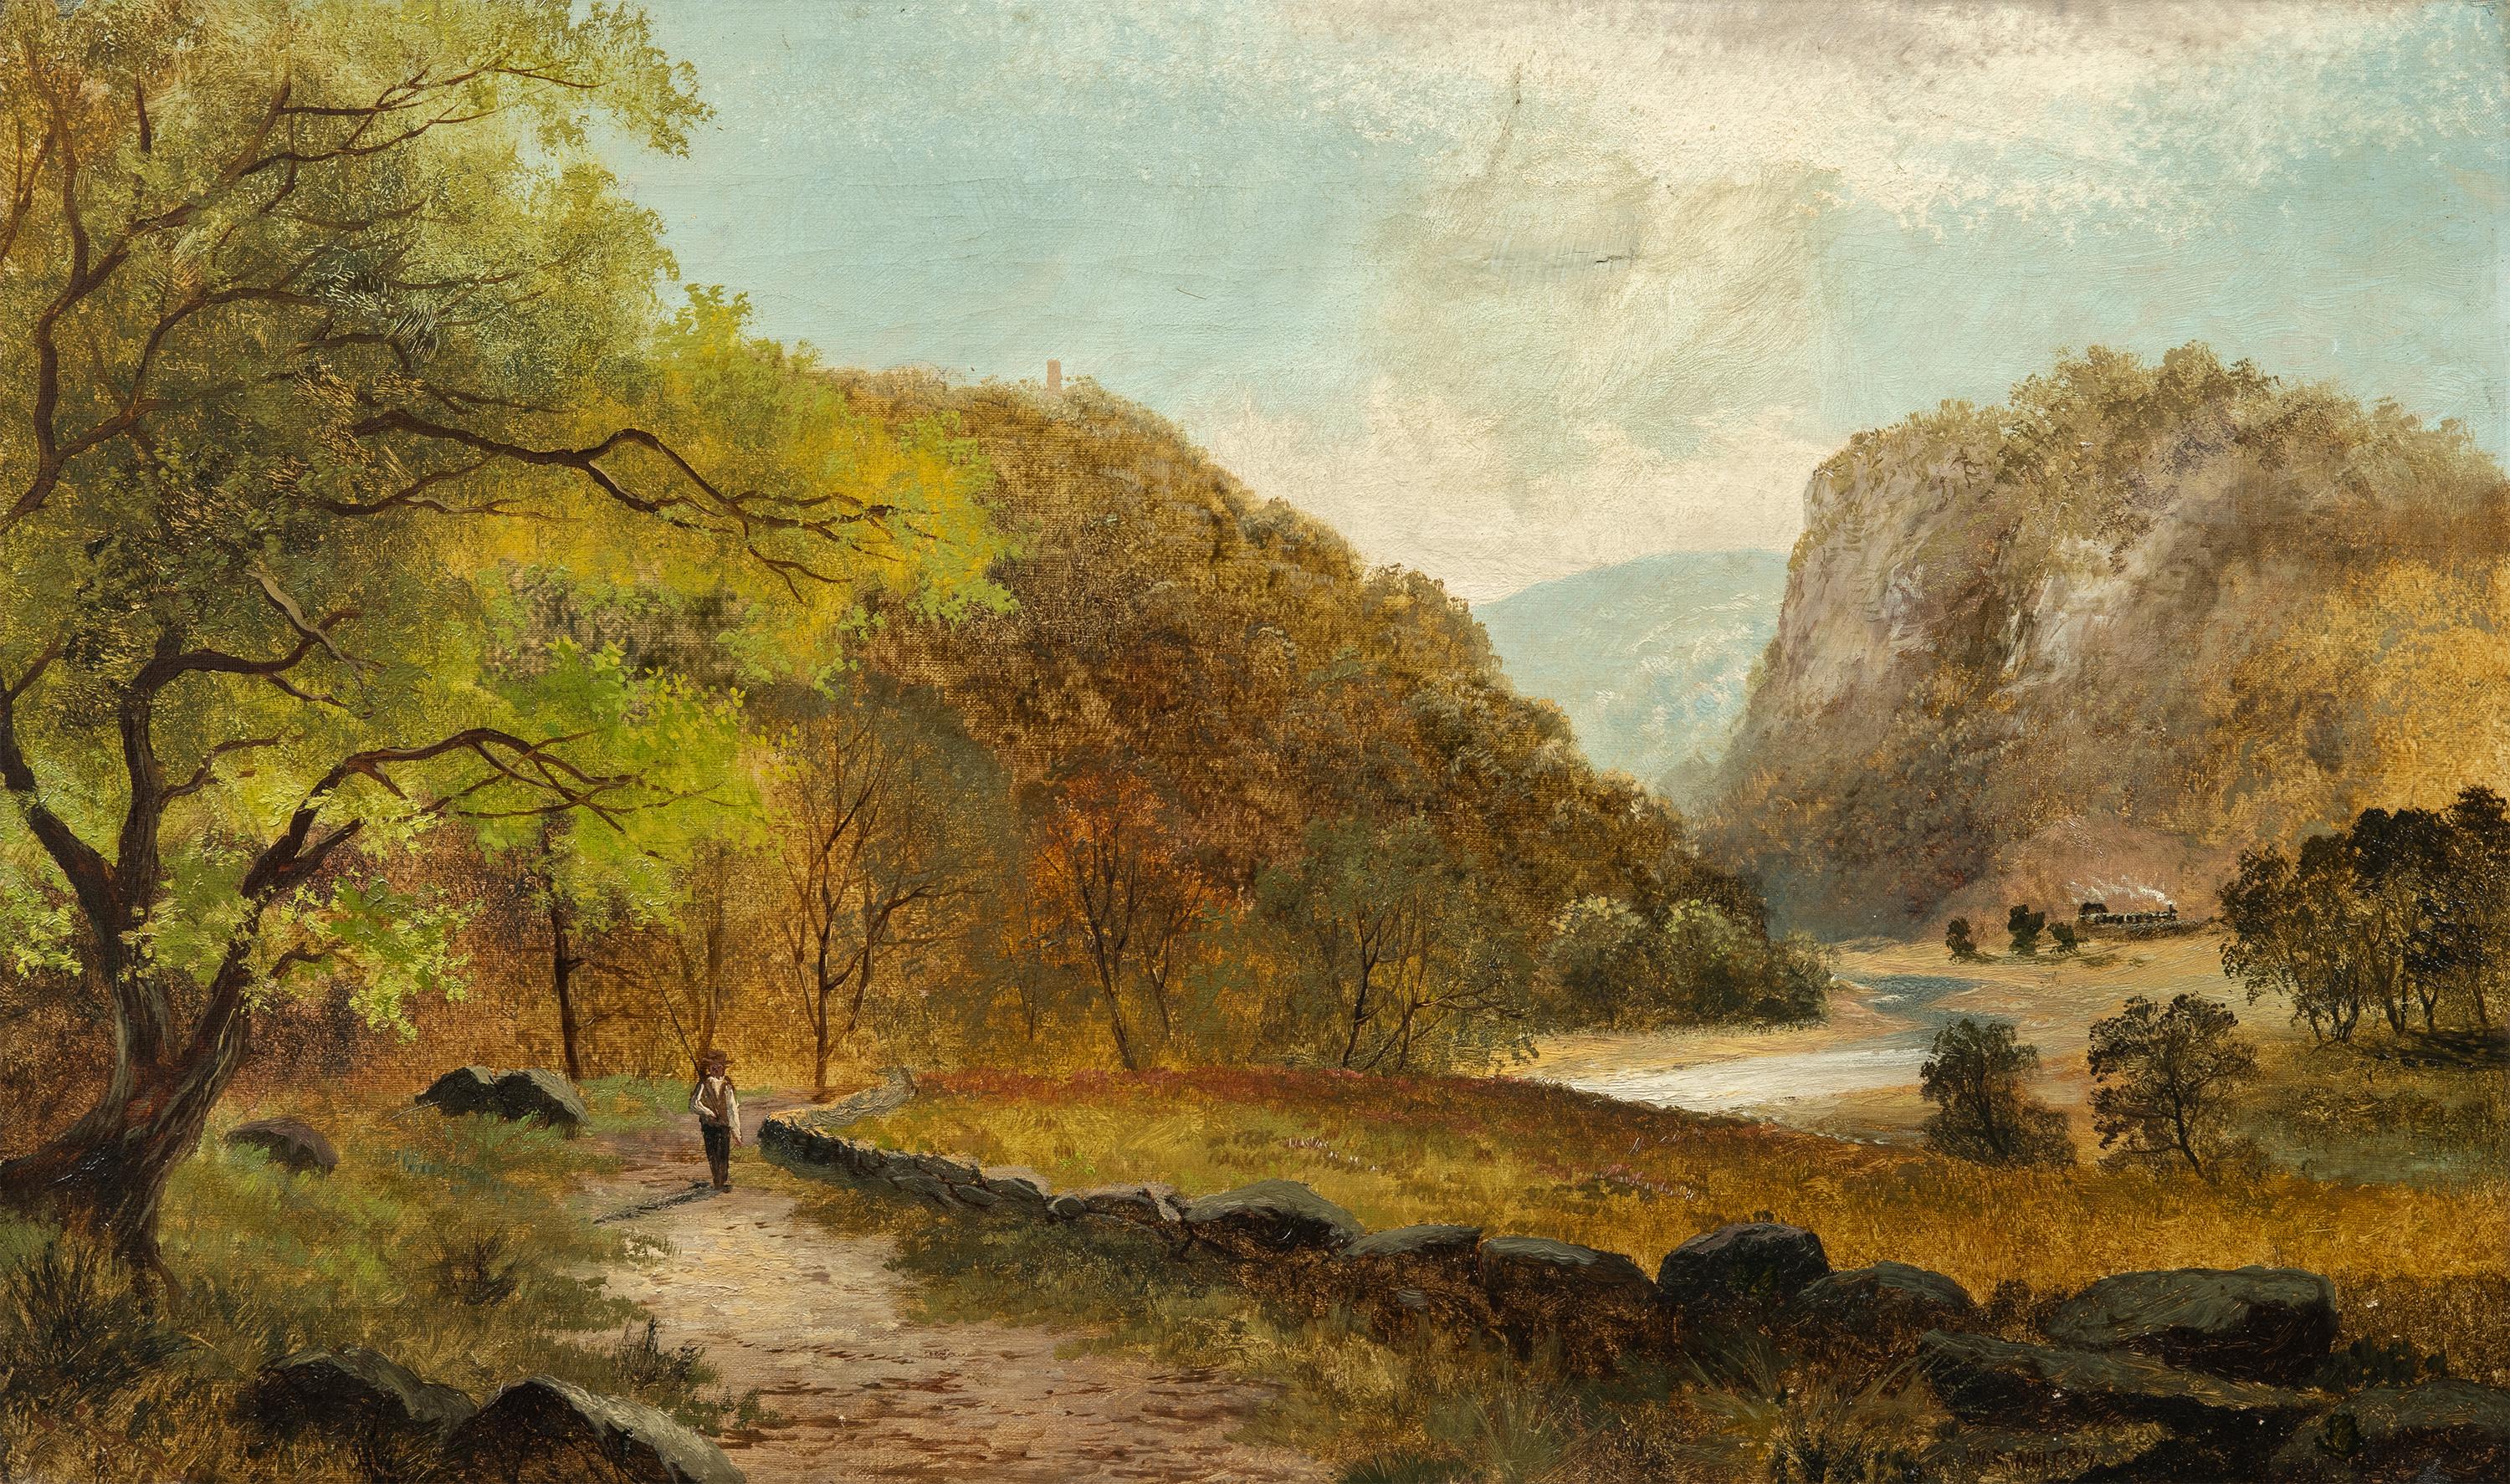 Unknown Landscape Painting - Naturalistic Continental painter - 19th century Continental landscape painting